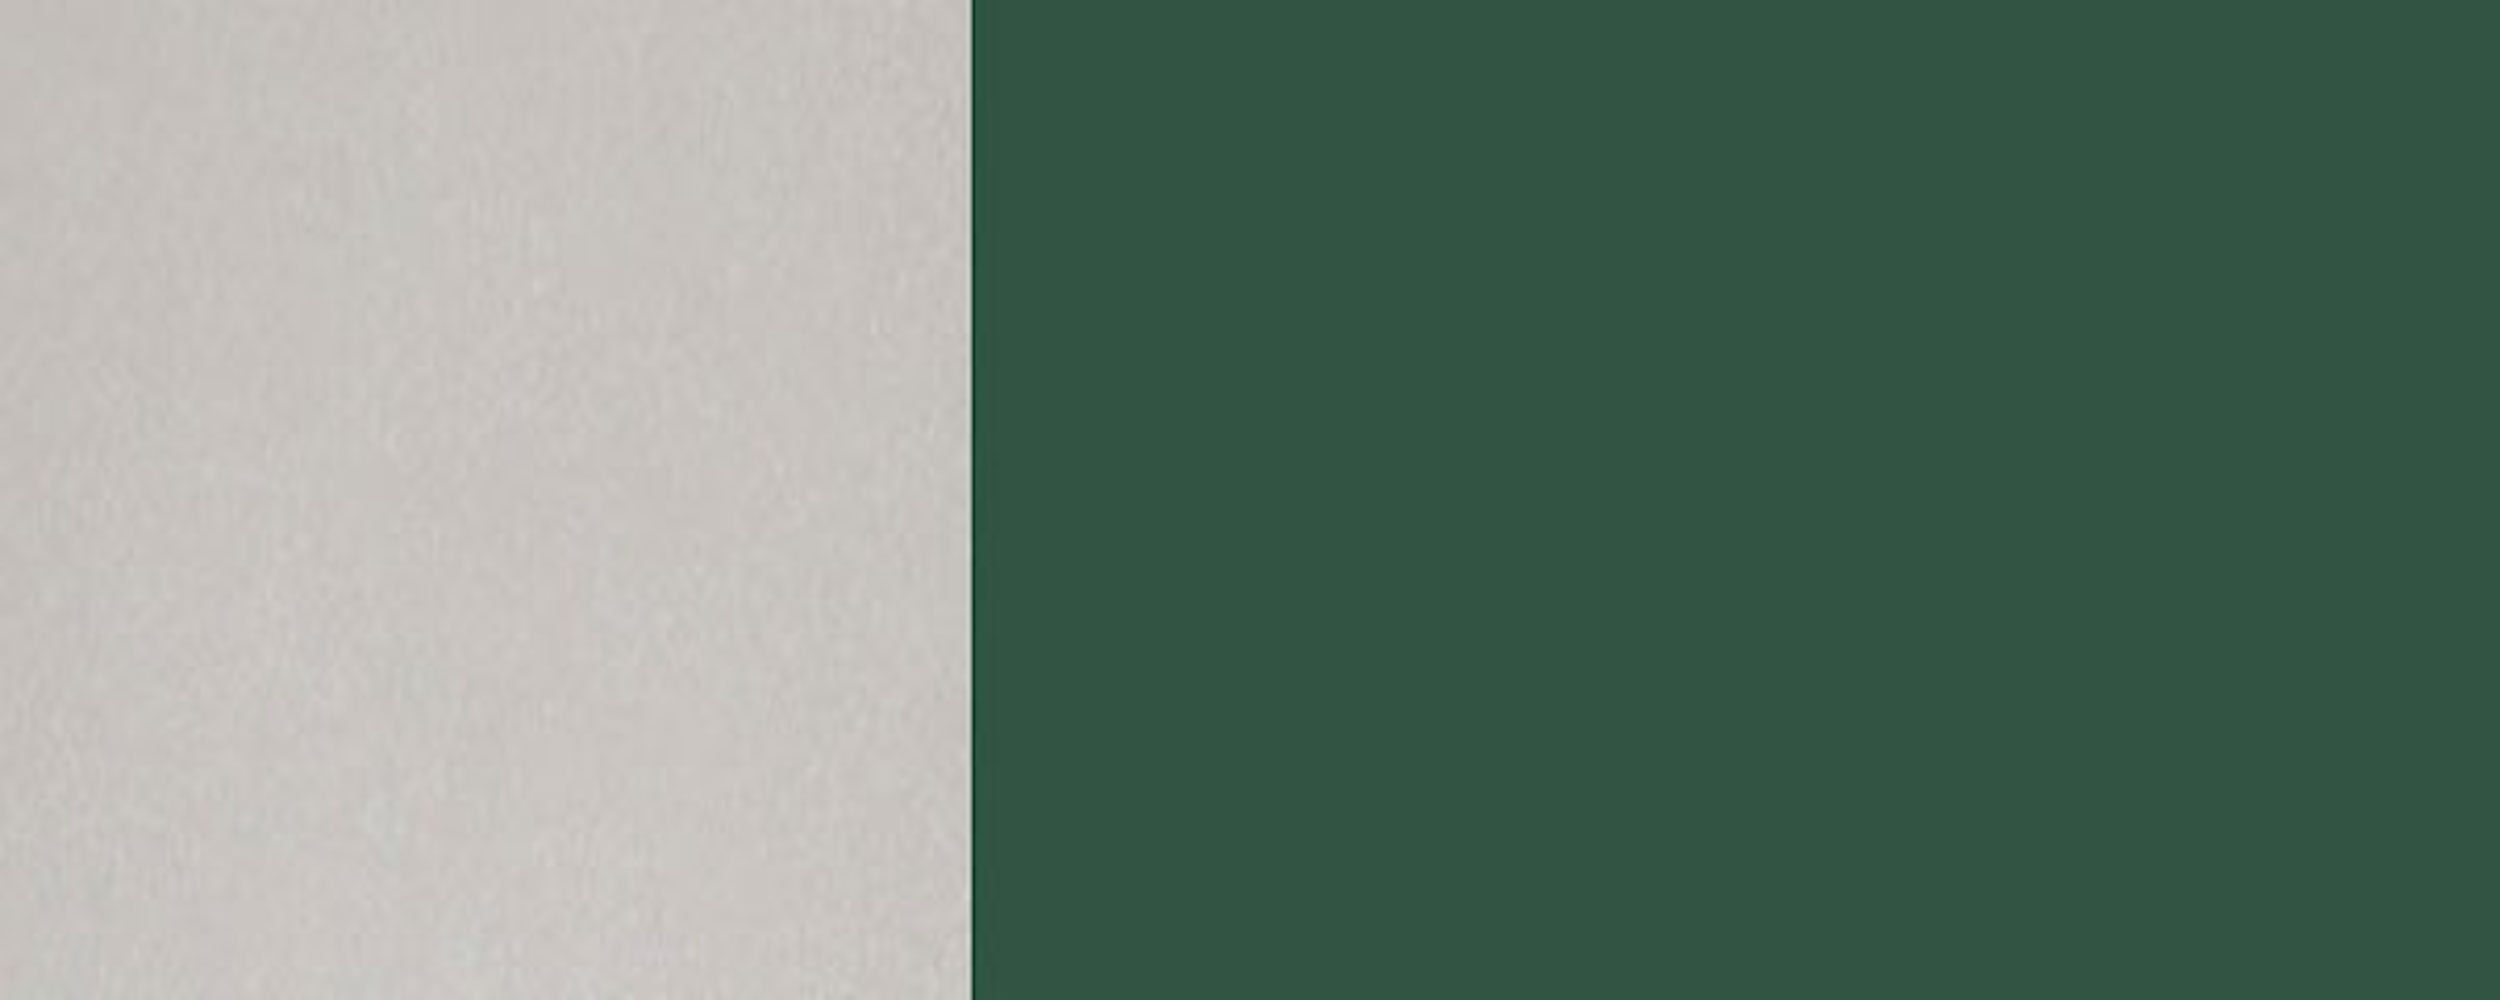 90cm &Sprossen kieferngrün Korpusfarbe Unterschrank Feldmann-Wohnen matt Tivoli & (glasklar) RAL wählbar (Tivoli) 6028 2-trg Front- Glasfront